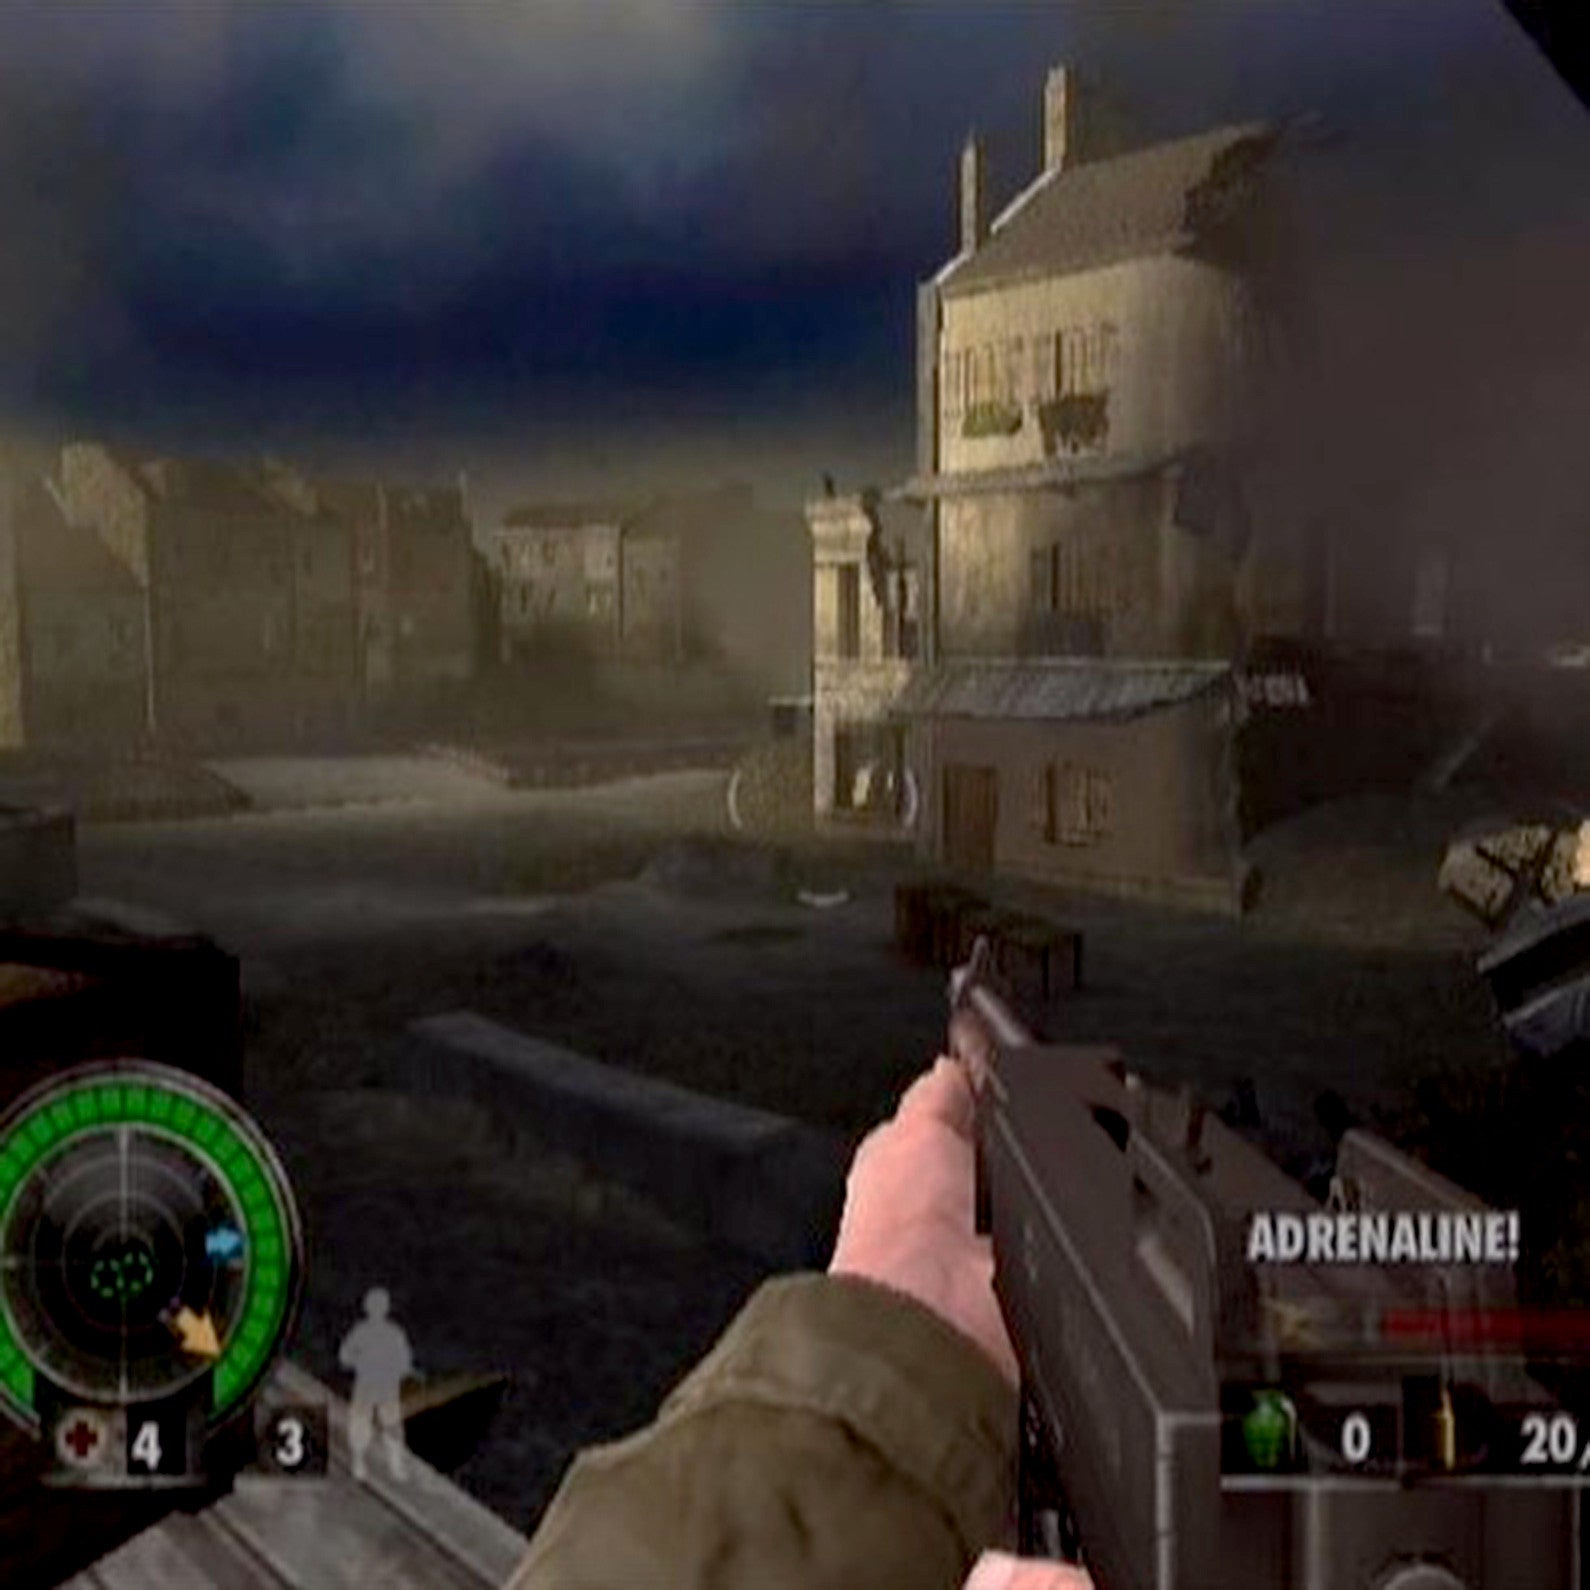 Medal of Honor: European Assault Nintendo Gamecube Game - Screenshot